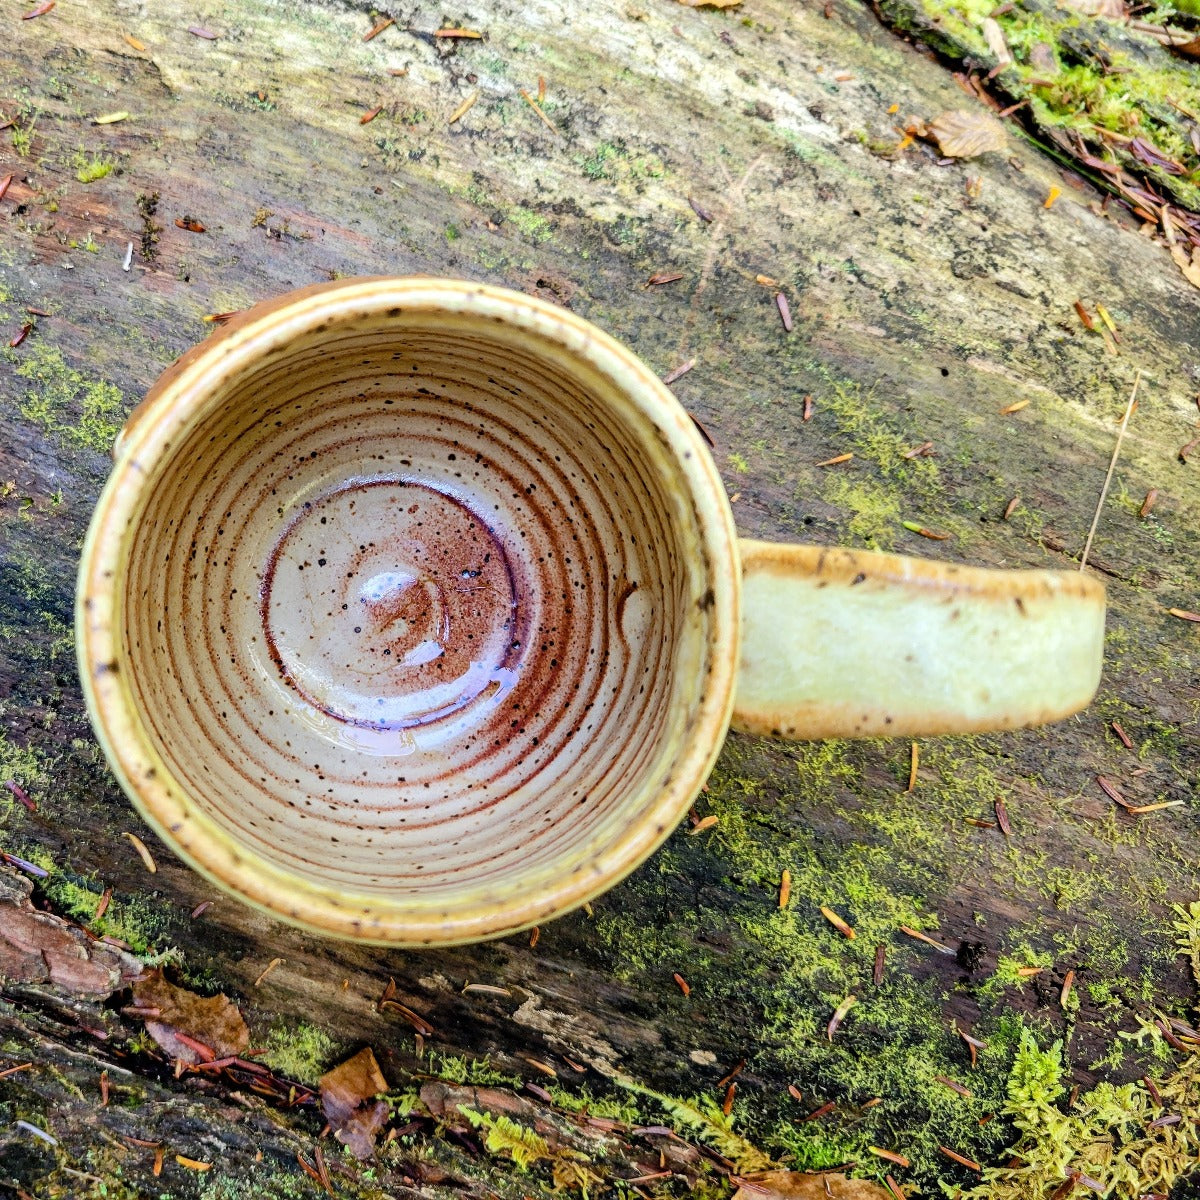 Inside look at the handmade pottery mug "HOT-TEA"